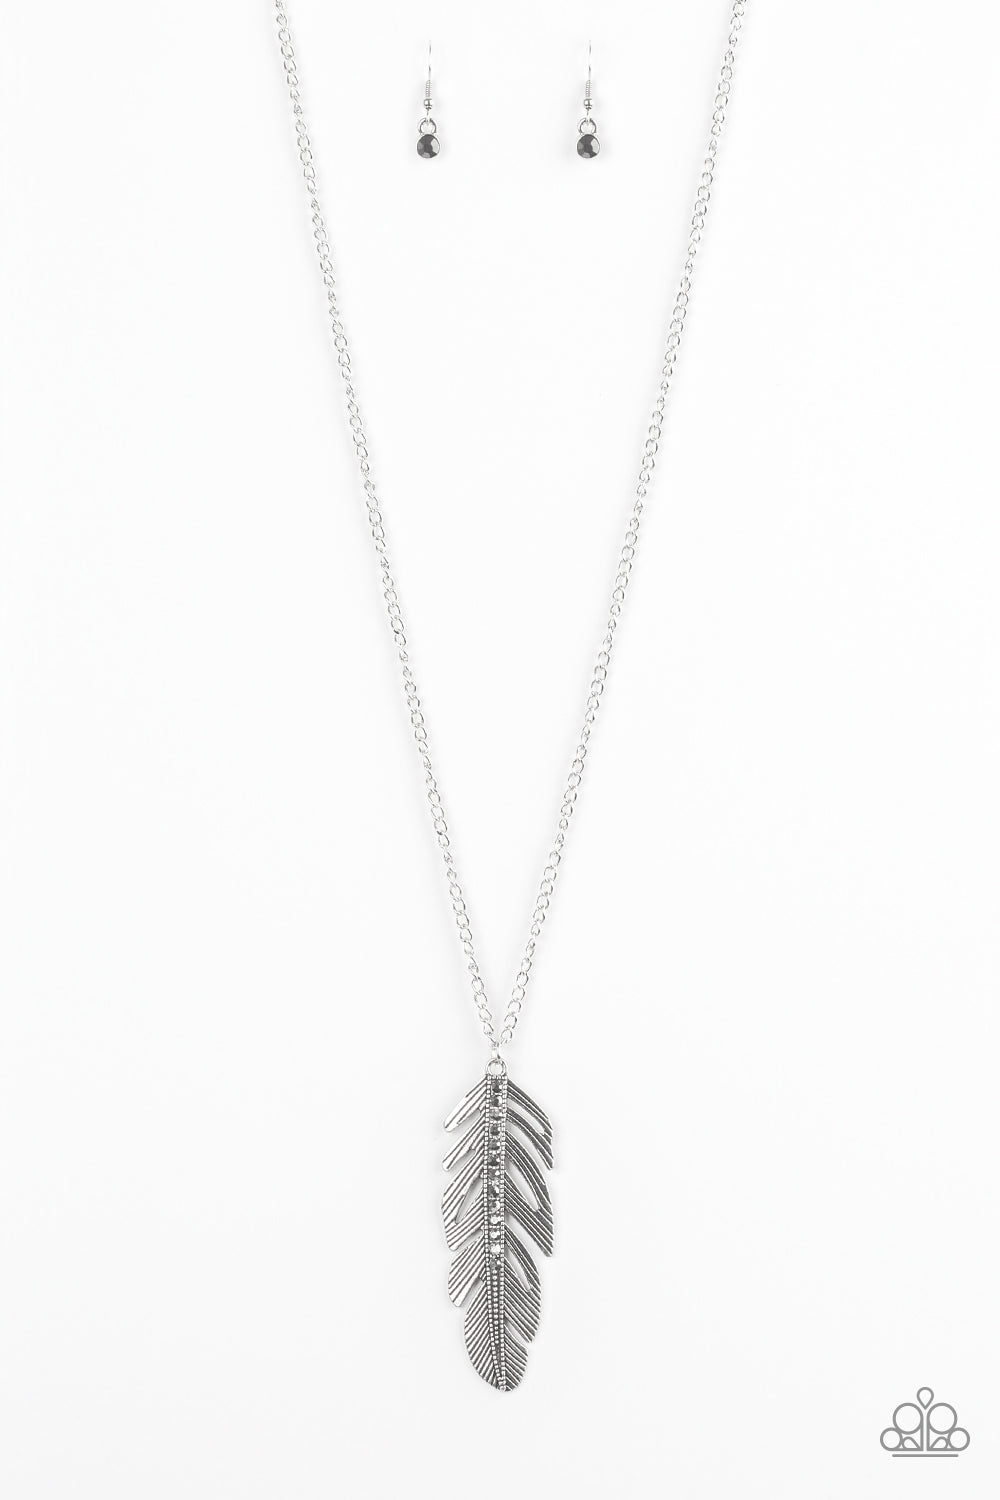 Sky Quest - Silver necklace